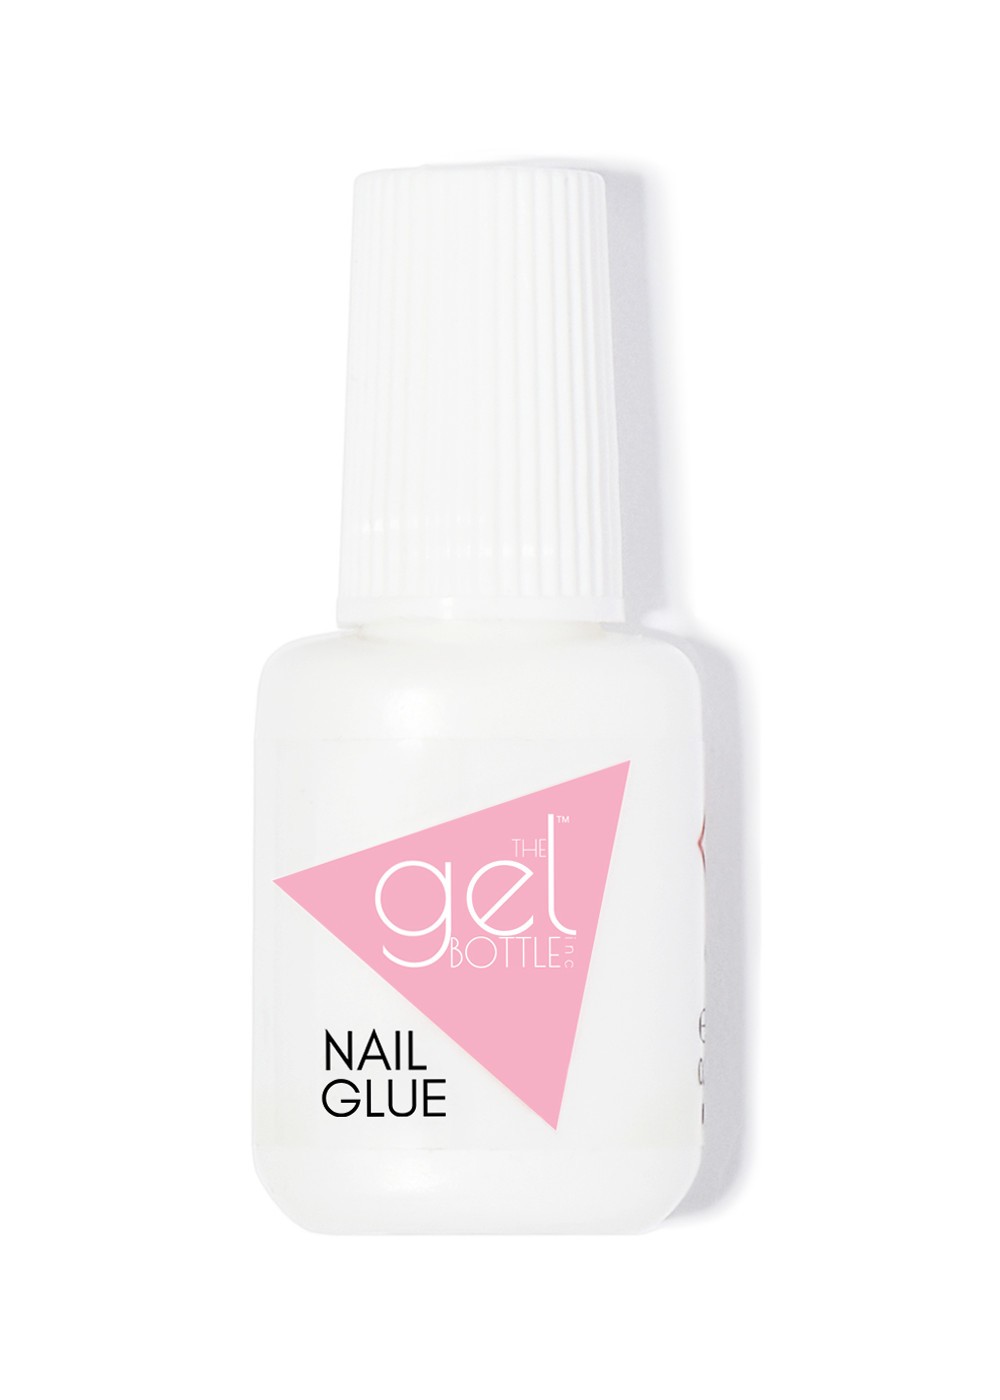 TGB PRO Nail Glue - The GelBottle NZ - gel nail polish